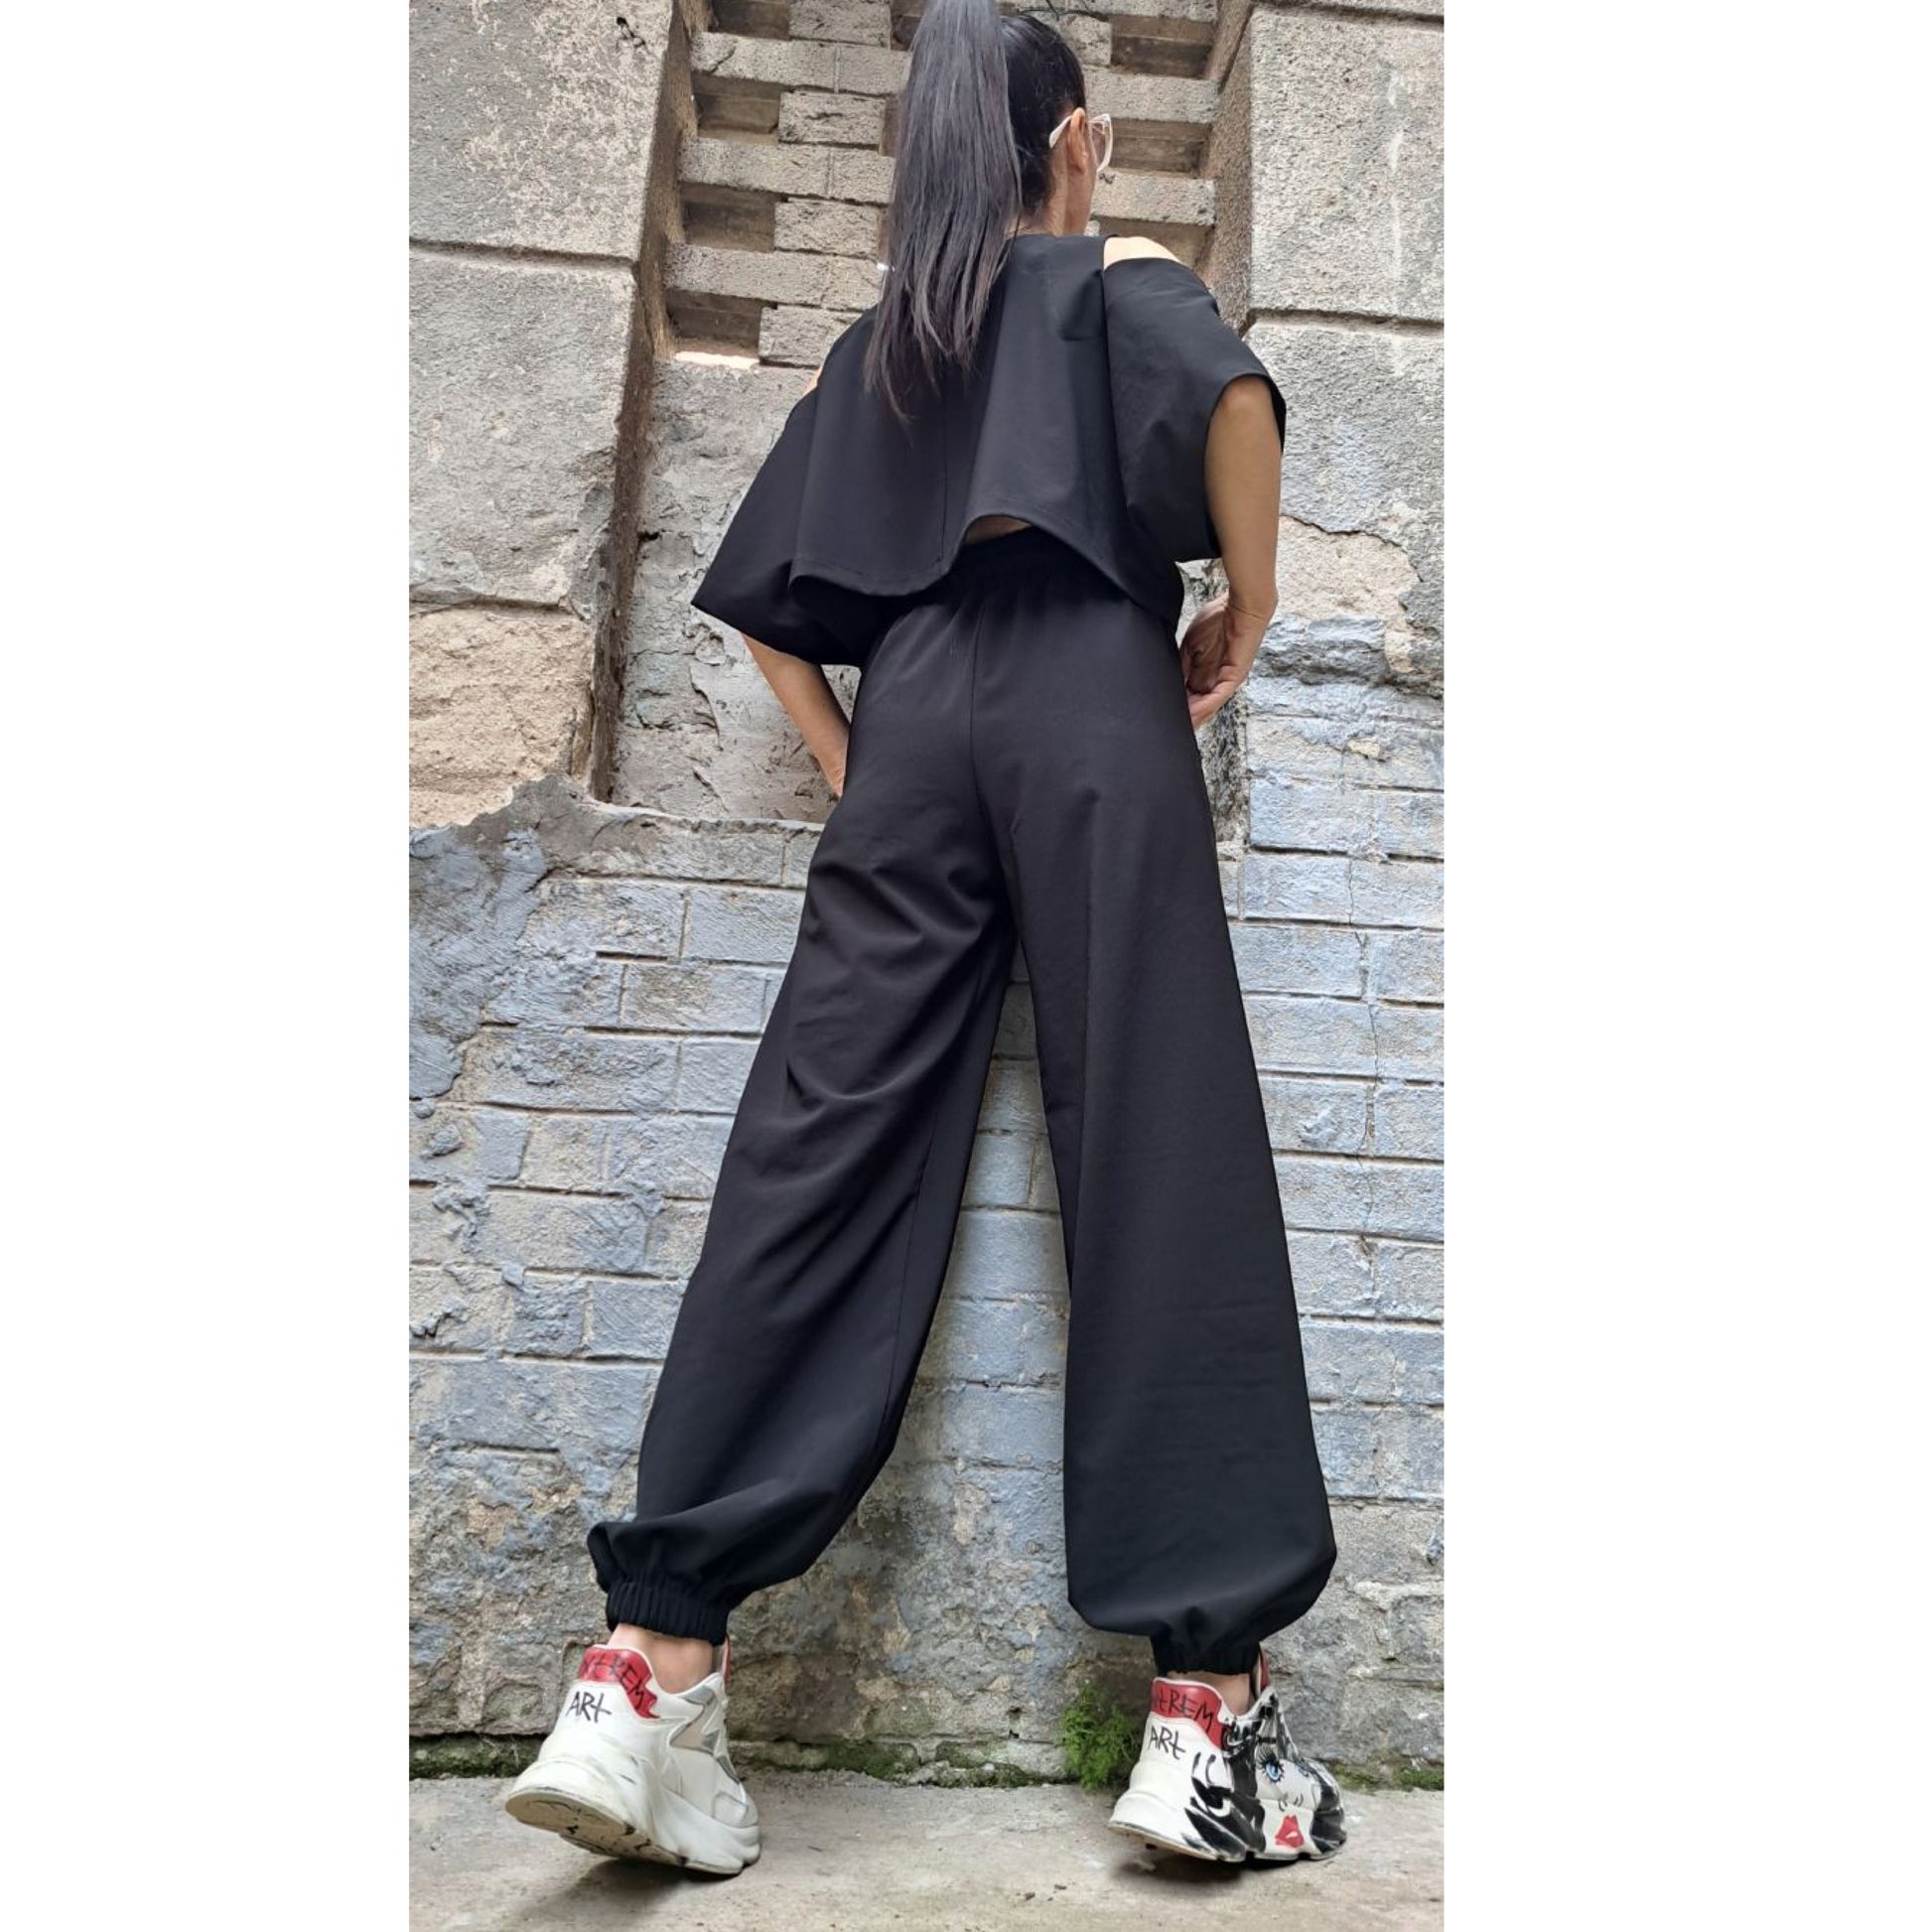 Summer Pants Top Black Set - Handmade clothing from Angel By Silvia - Top Designer Brands 